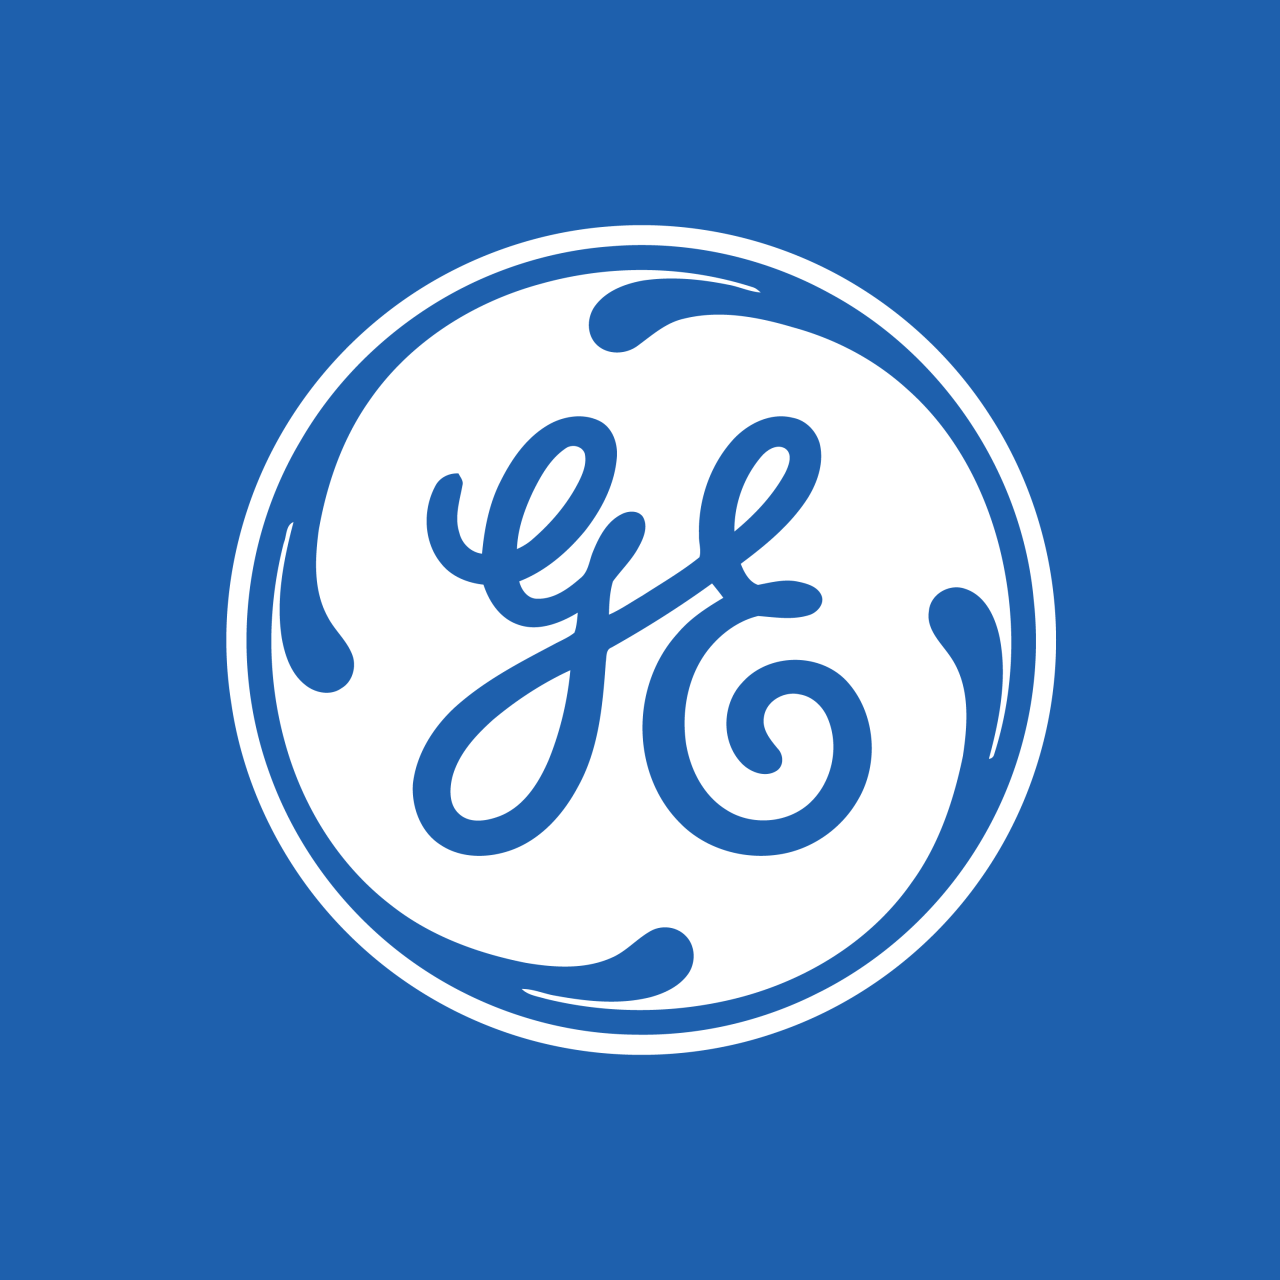 1890s Logo - GE (General Electric)